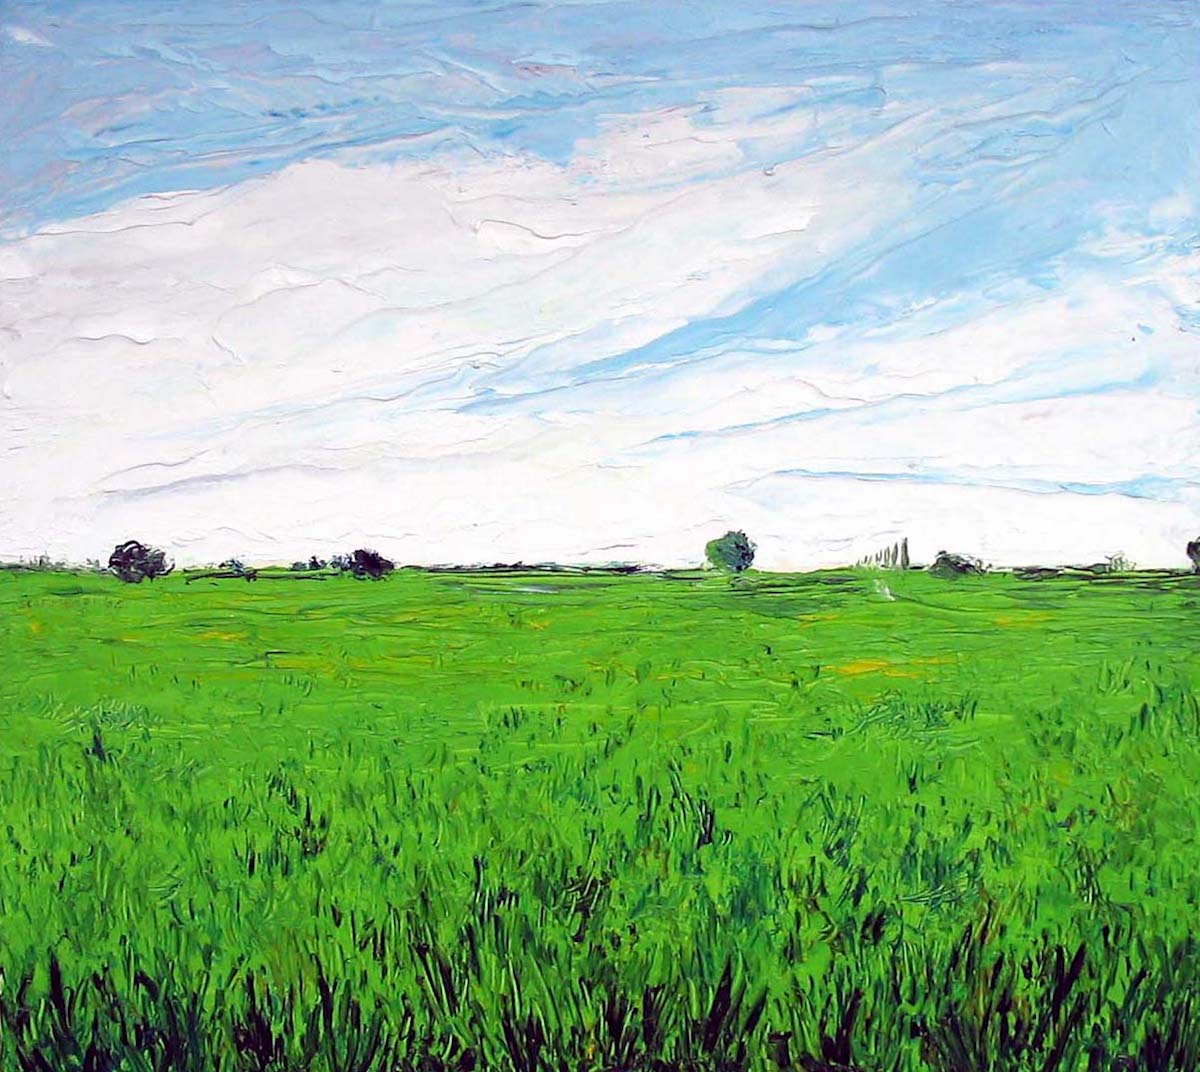 Dipinto serie mista - Quanta pace la natura 2004, olio su tela, 86x77 cm